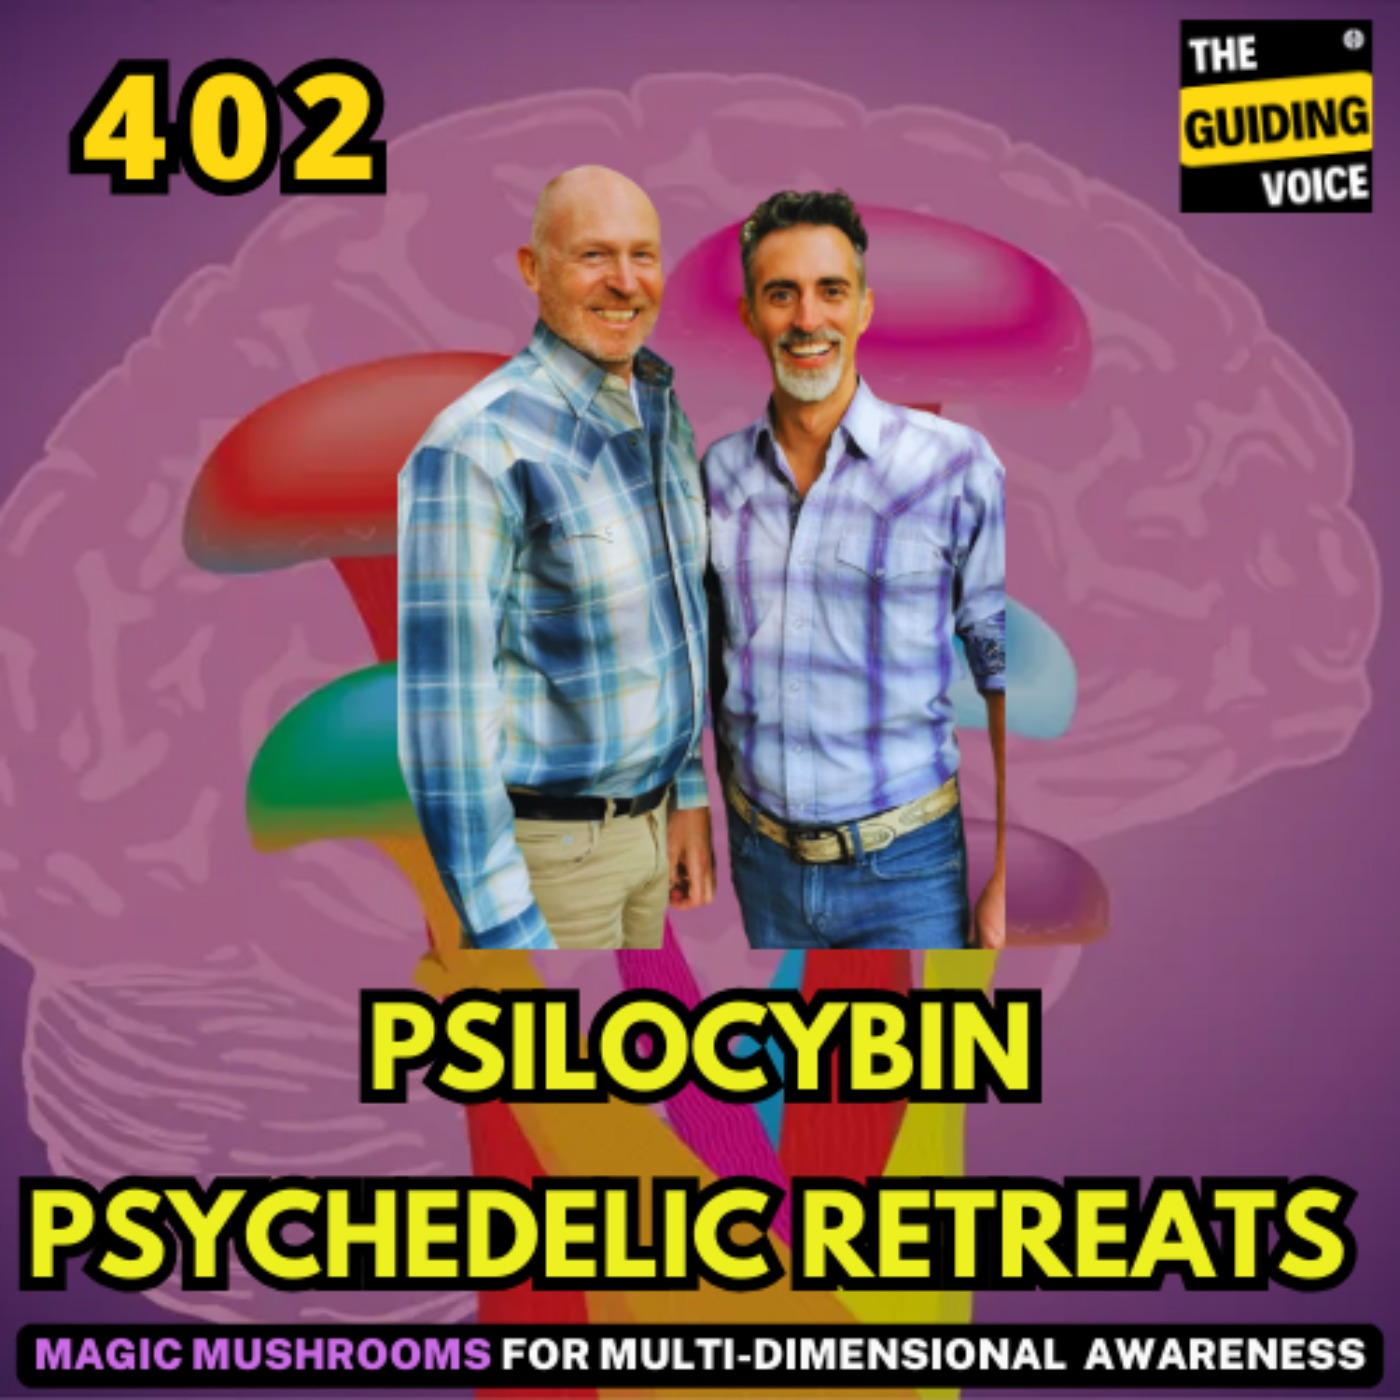 Psychedelic retreats for senior executives through Magic Mushrooms | Rob Grover and Gary Logan (The journey mens collective) | #TGV402